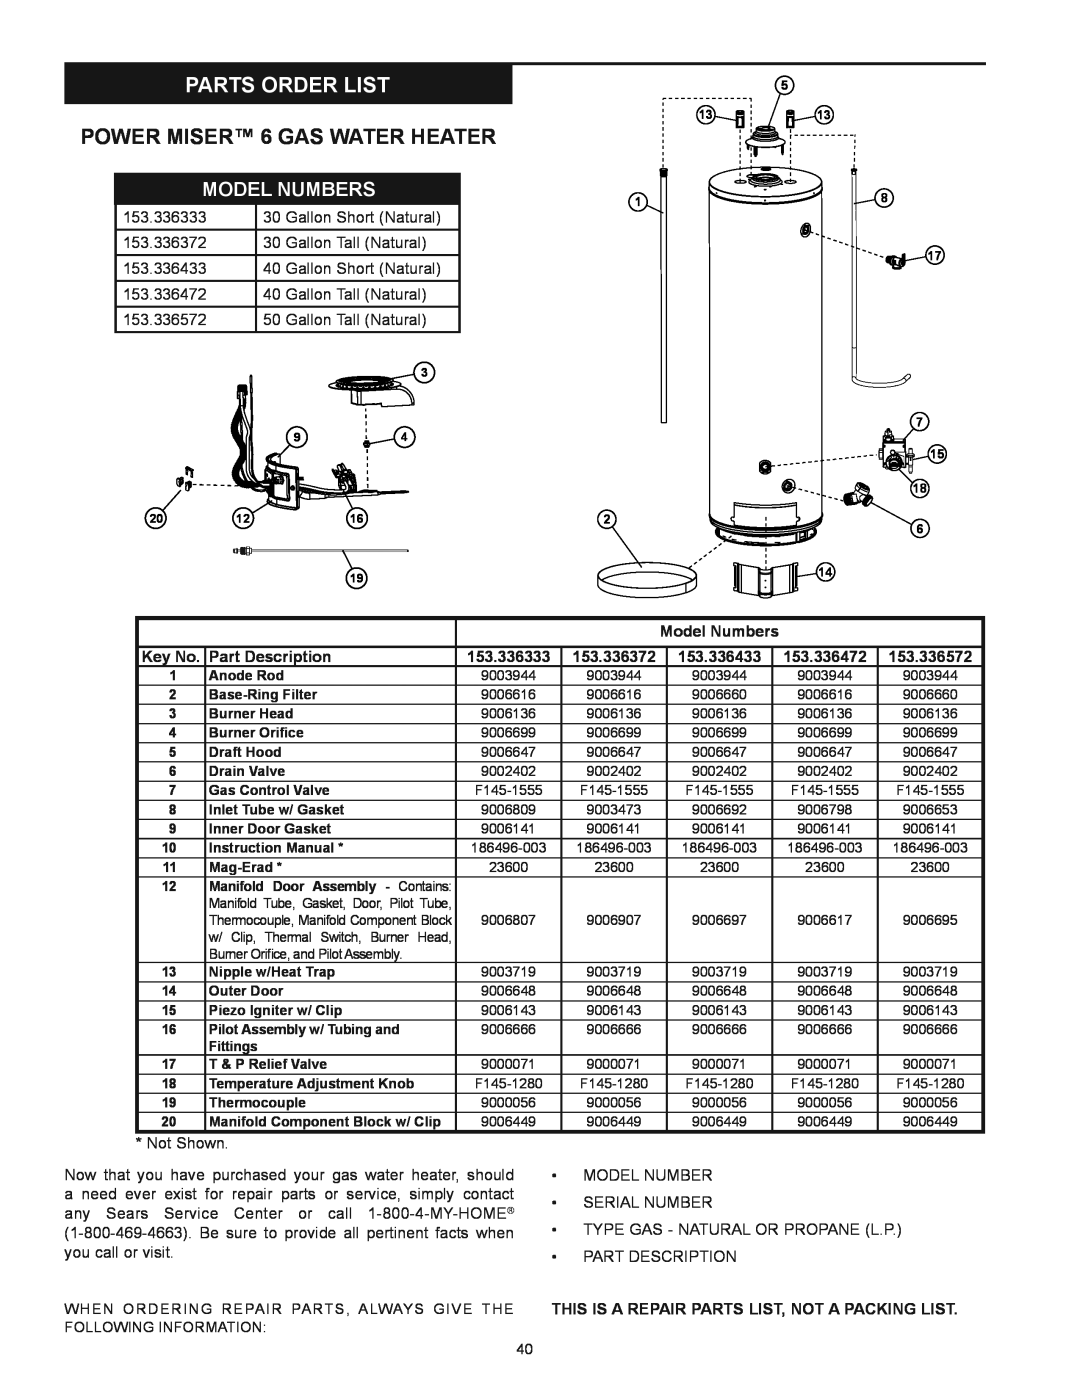 Kenmore 153.336433, 153.336372 Parts Order List, POWER MISER 6 GAS WATER HEATER, Model Numbers, Key No. Part Description 